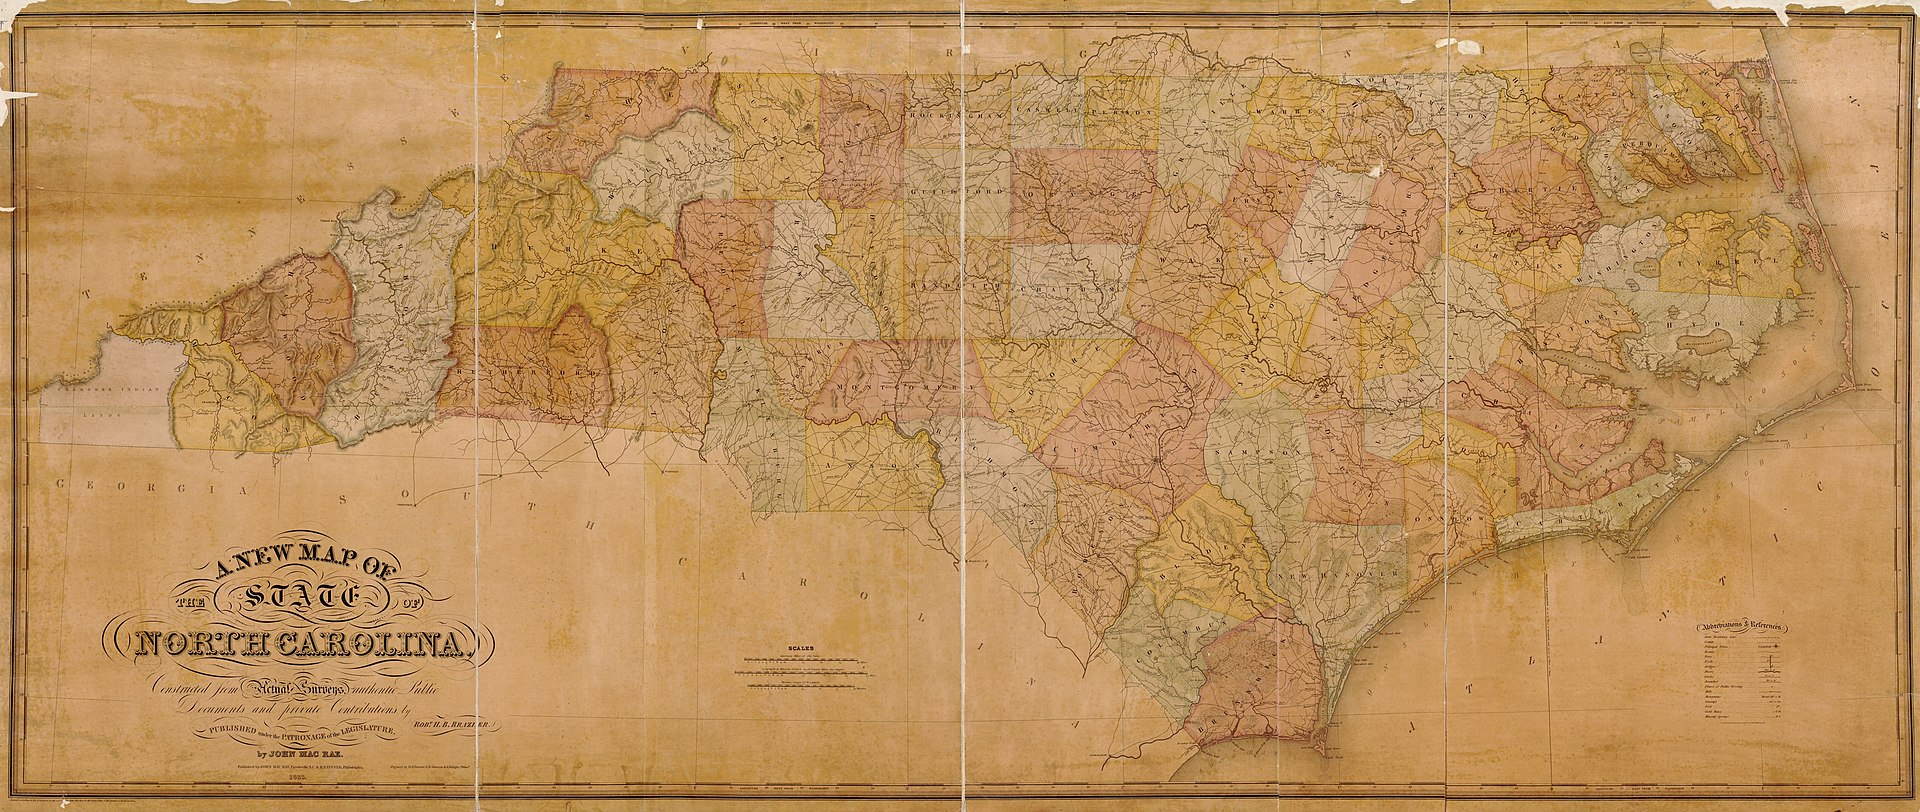 A map of North Carolina from 1833